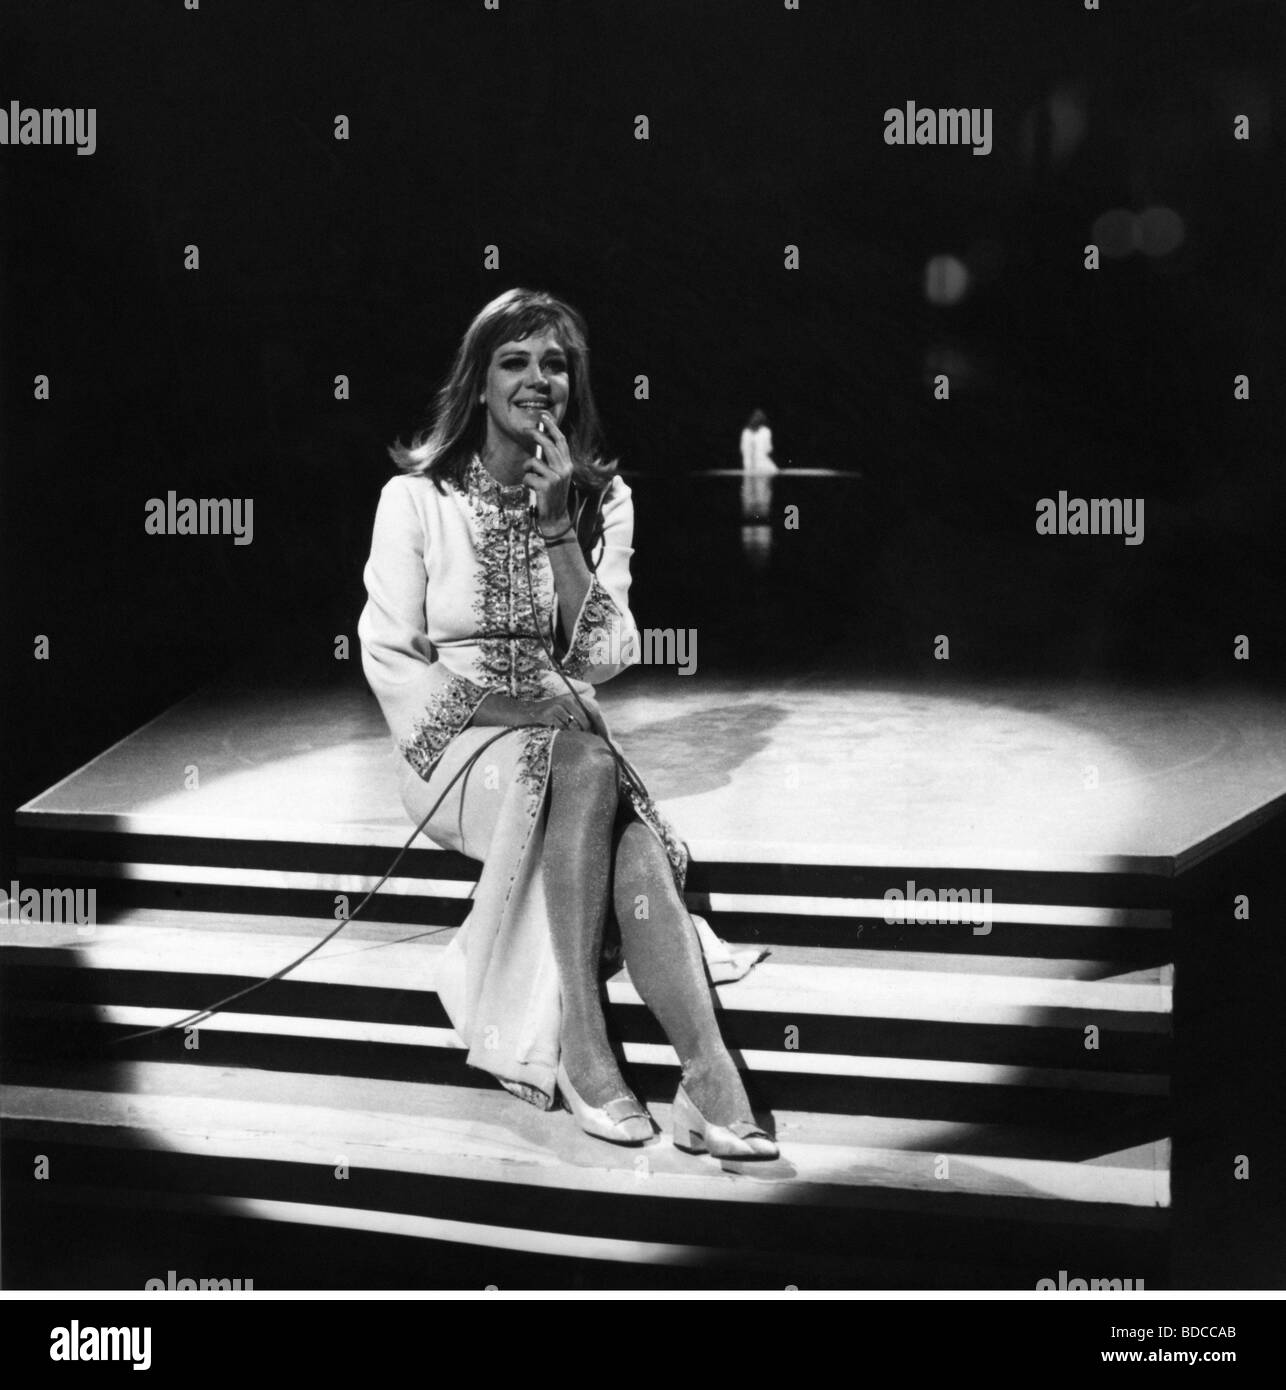 Knef, Hildegard, 28.12.1925 - 1.2.2002, attrice tedesca, full length, durante l'atto musicale in TV show, 1970s, , Foto Stock